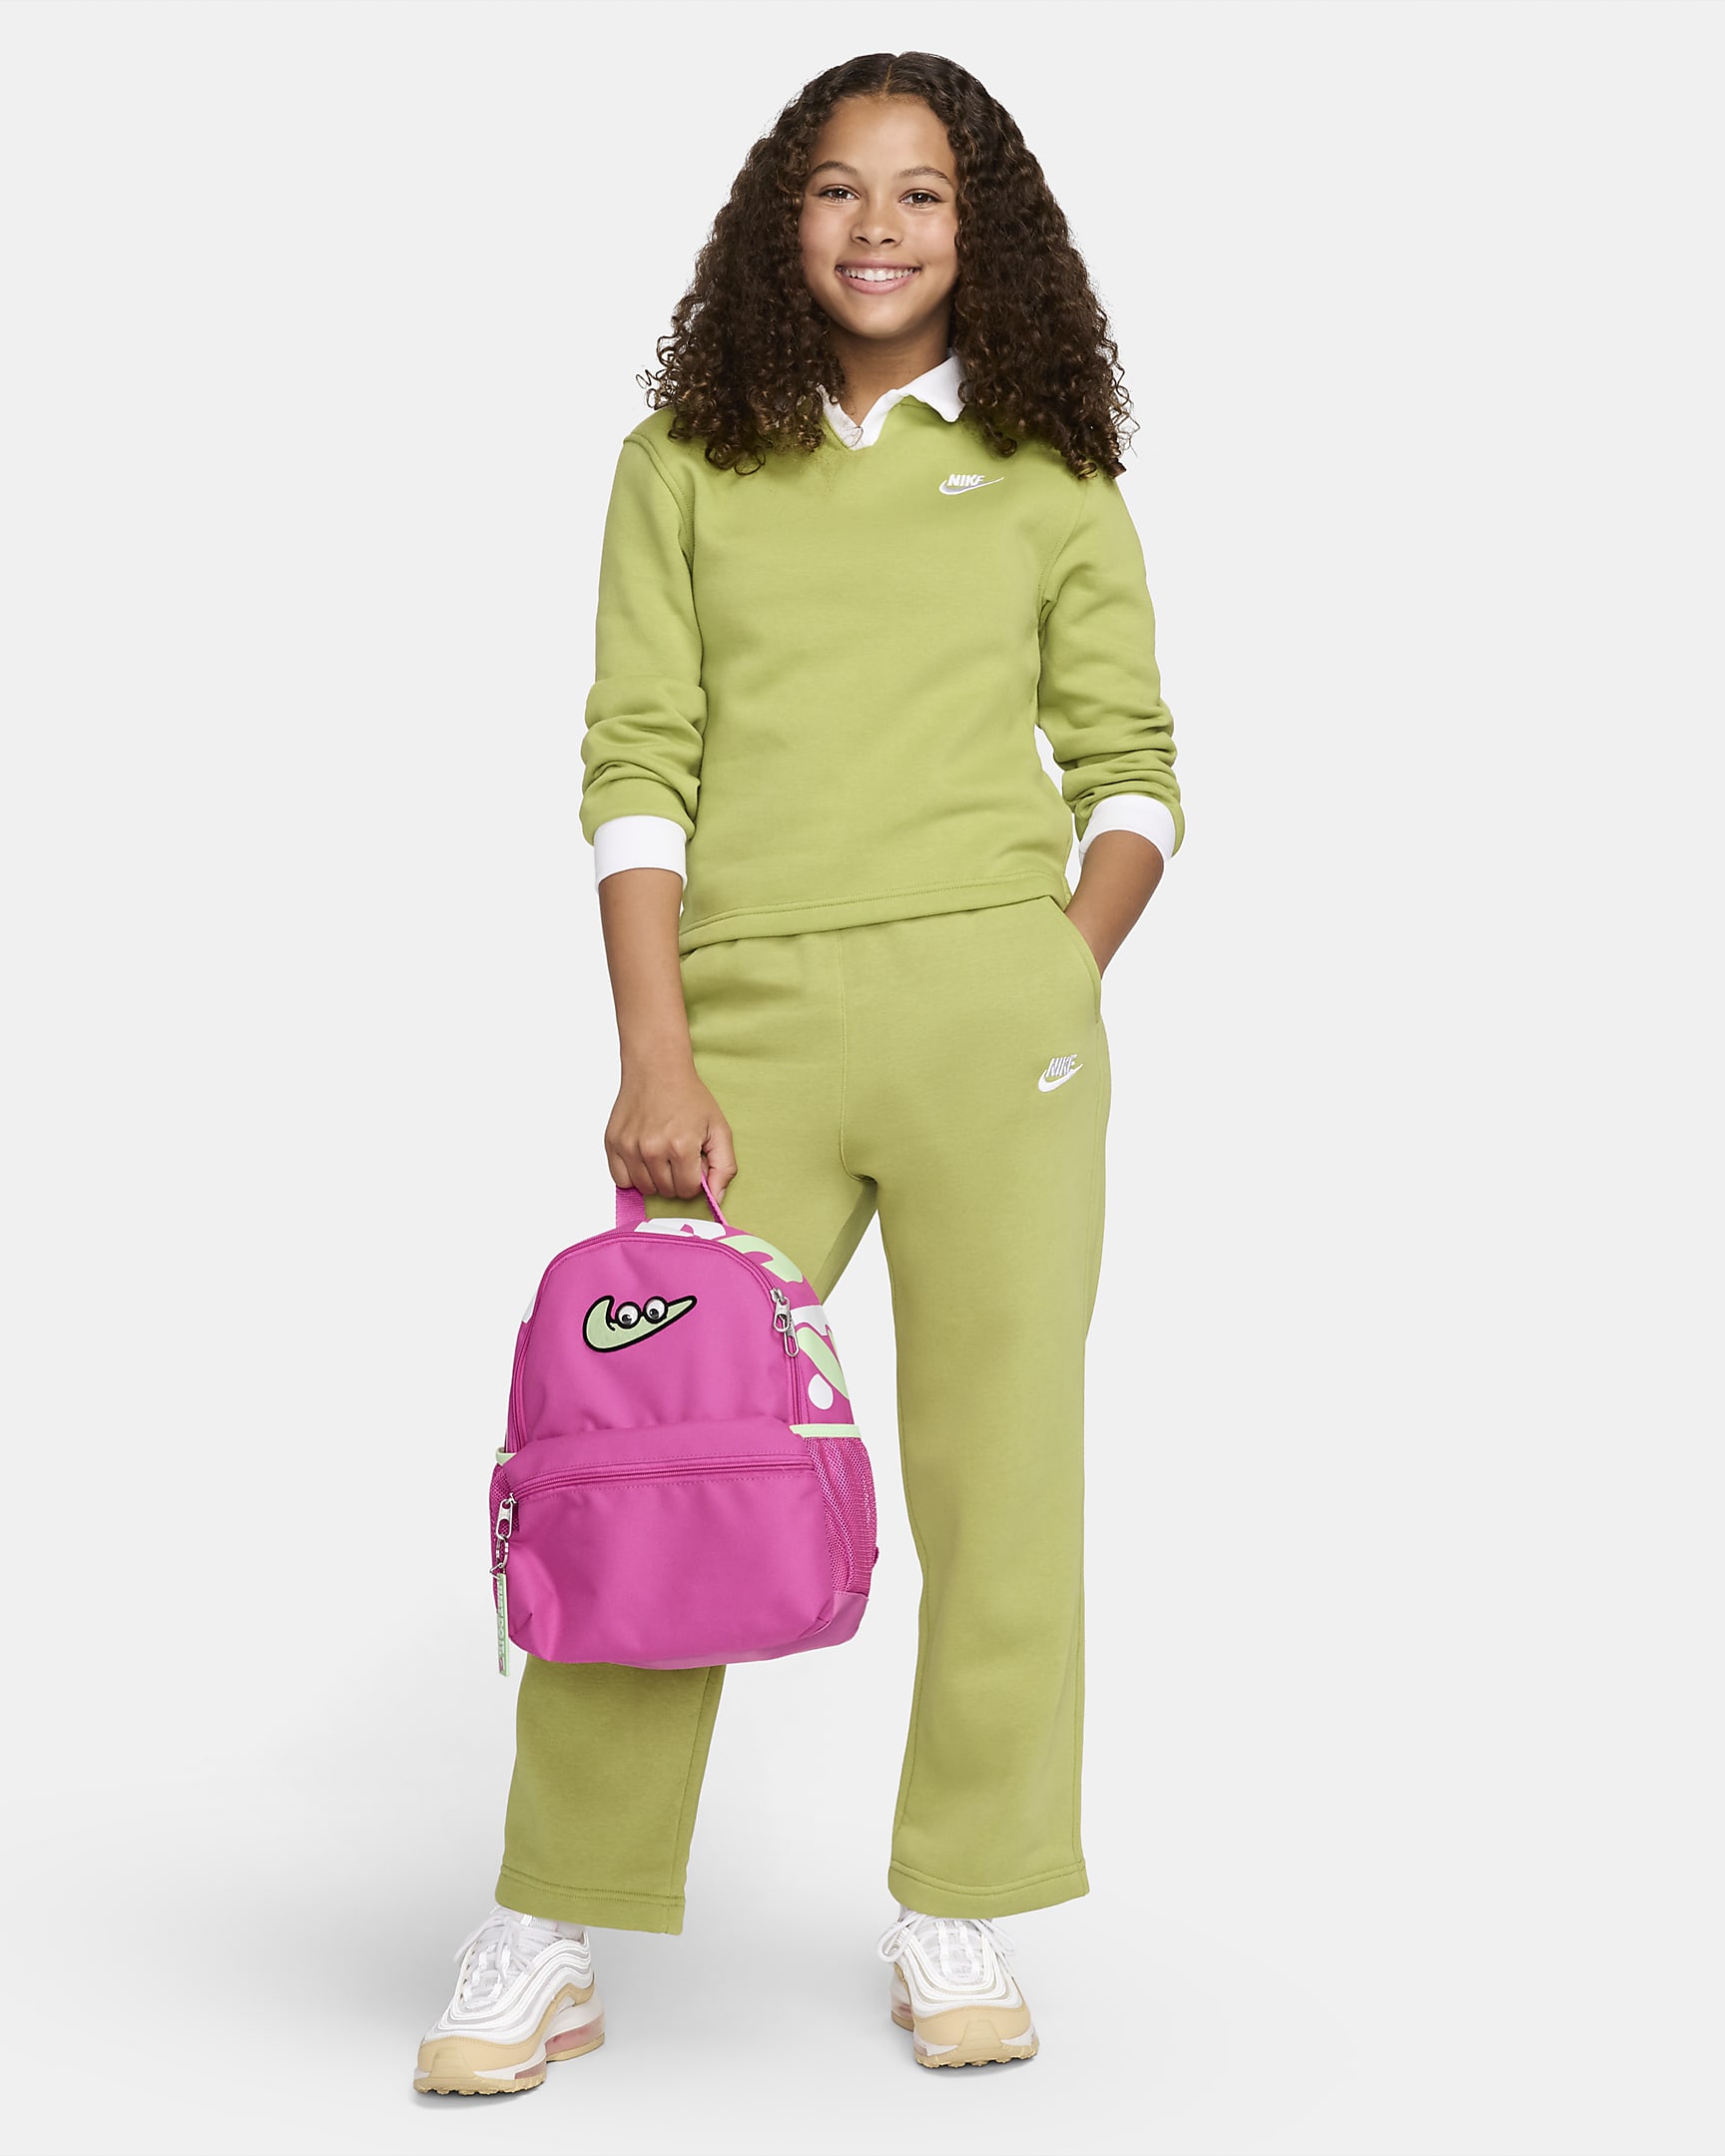 Nike Brasilia JDI Kids' Mini Backpack (11L) - Laser Fuchsia/Laser Fuchsia/Vapour Green